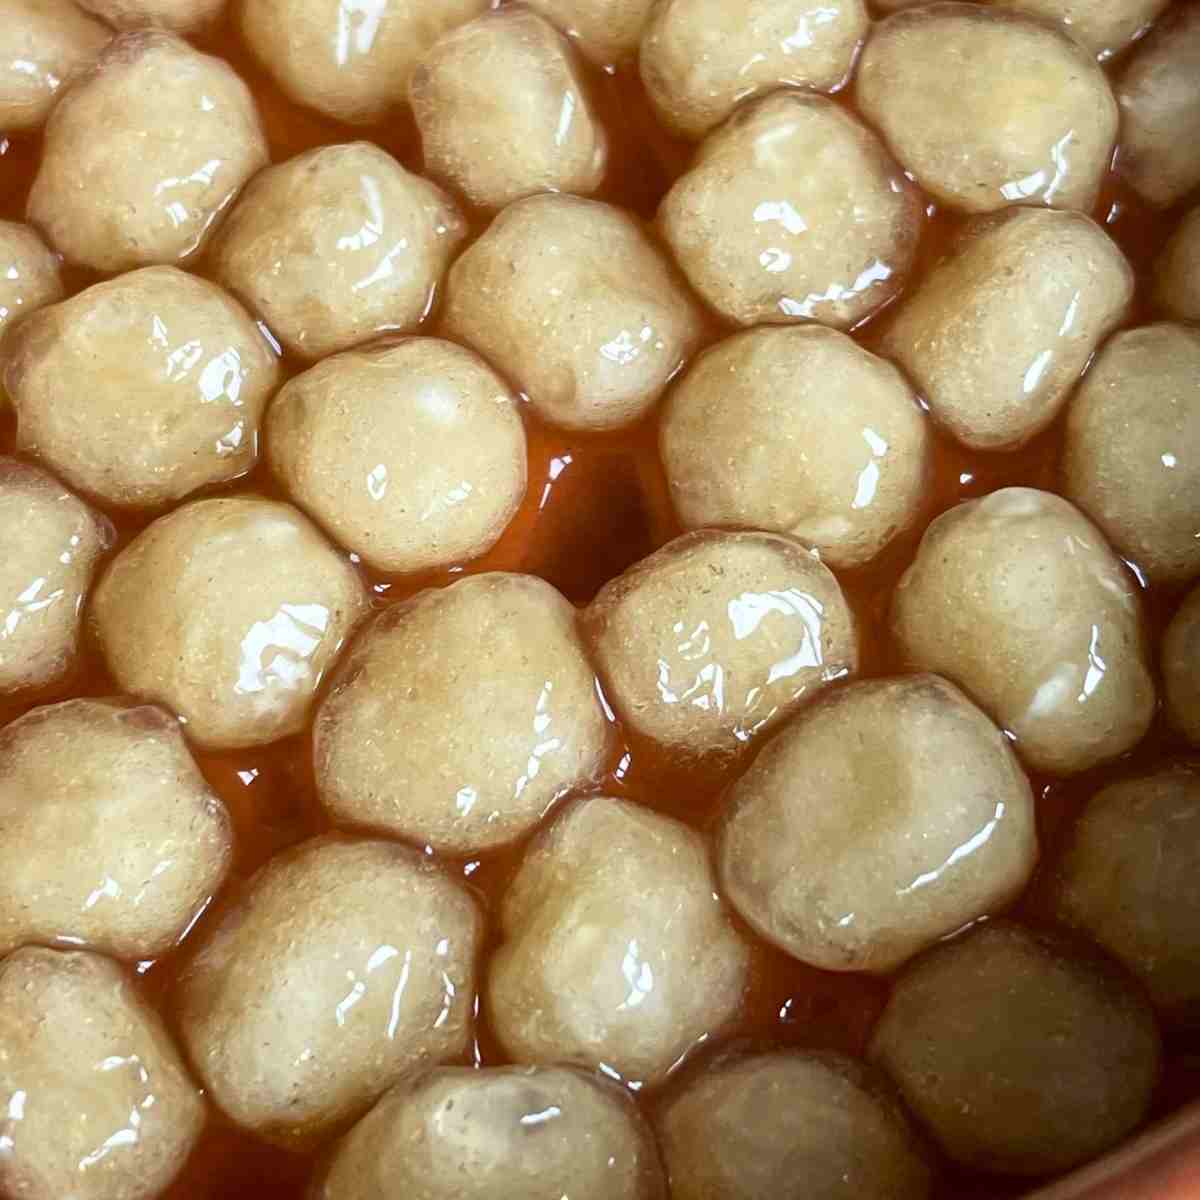 Honey tapioca pearls